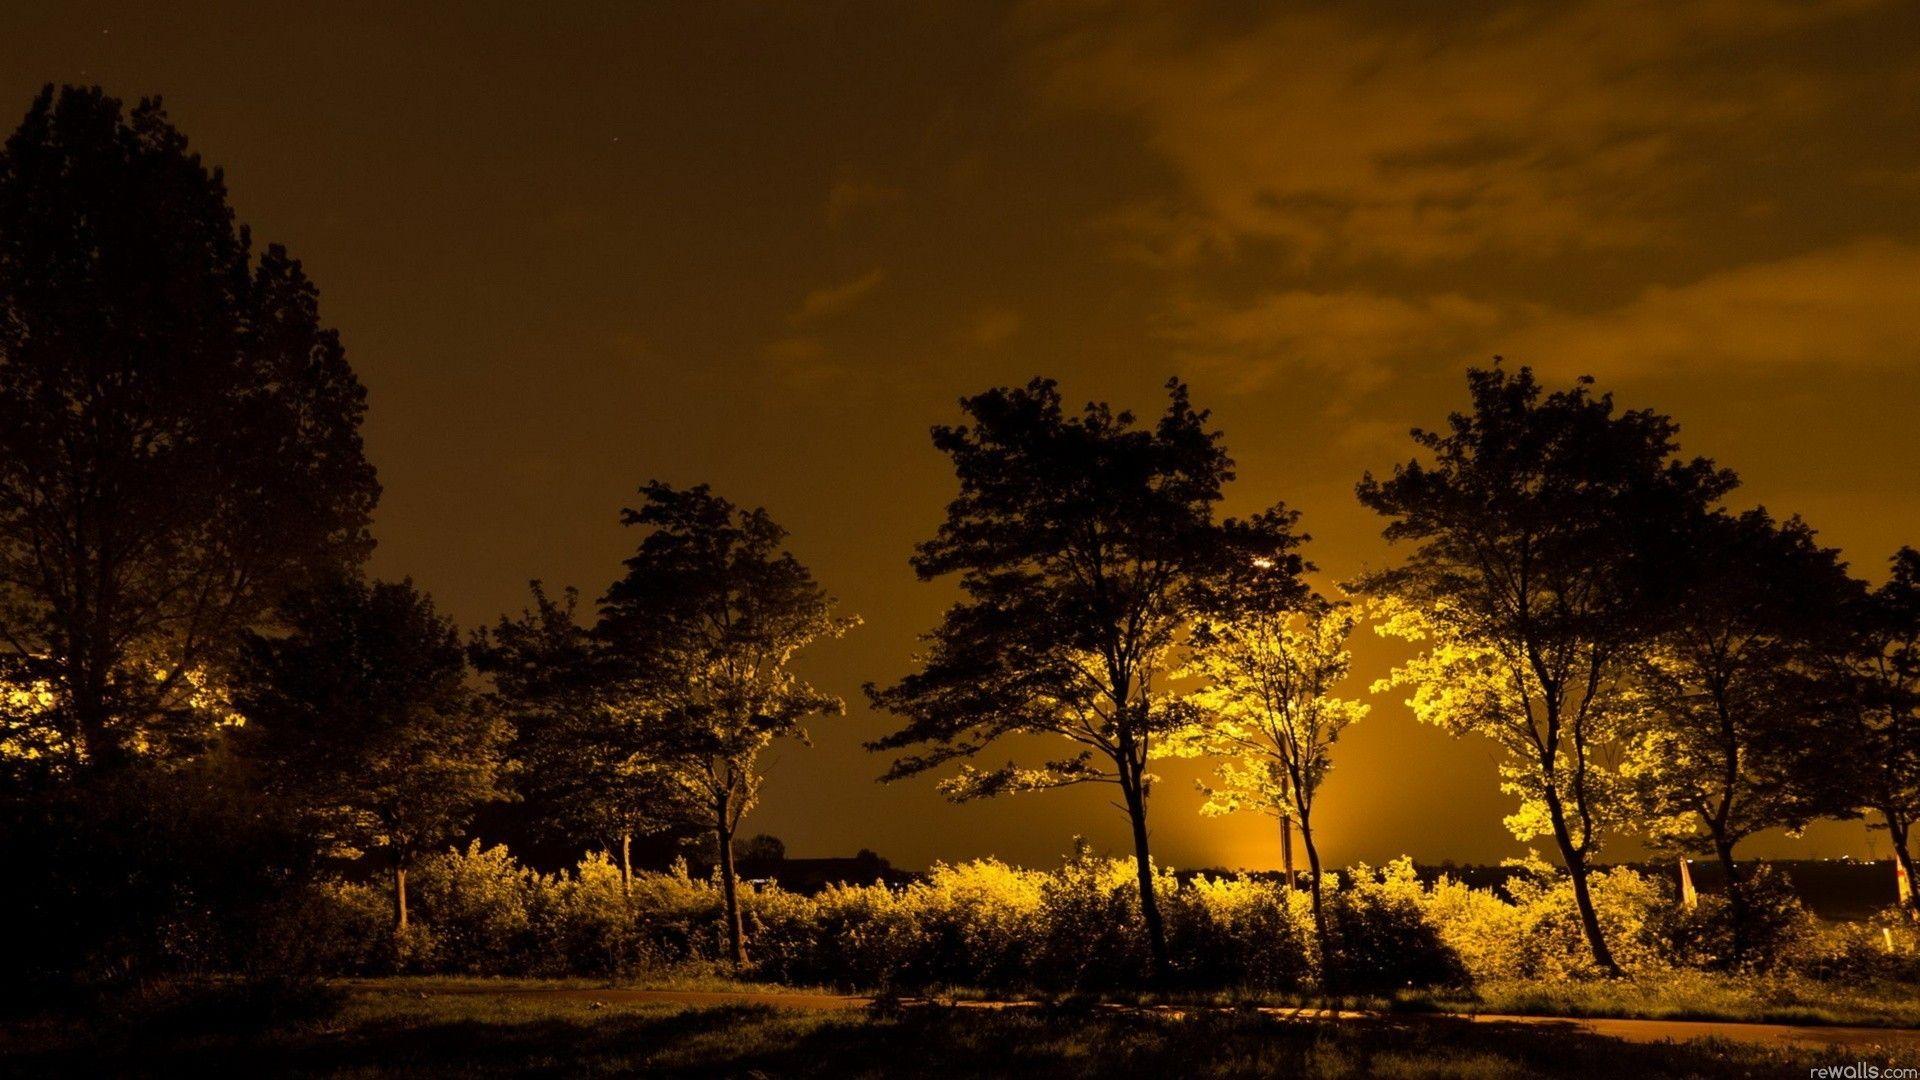 Light nature night trees wallpaper. PC